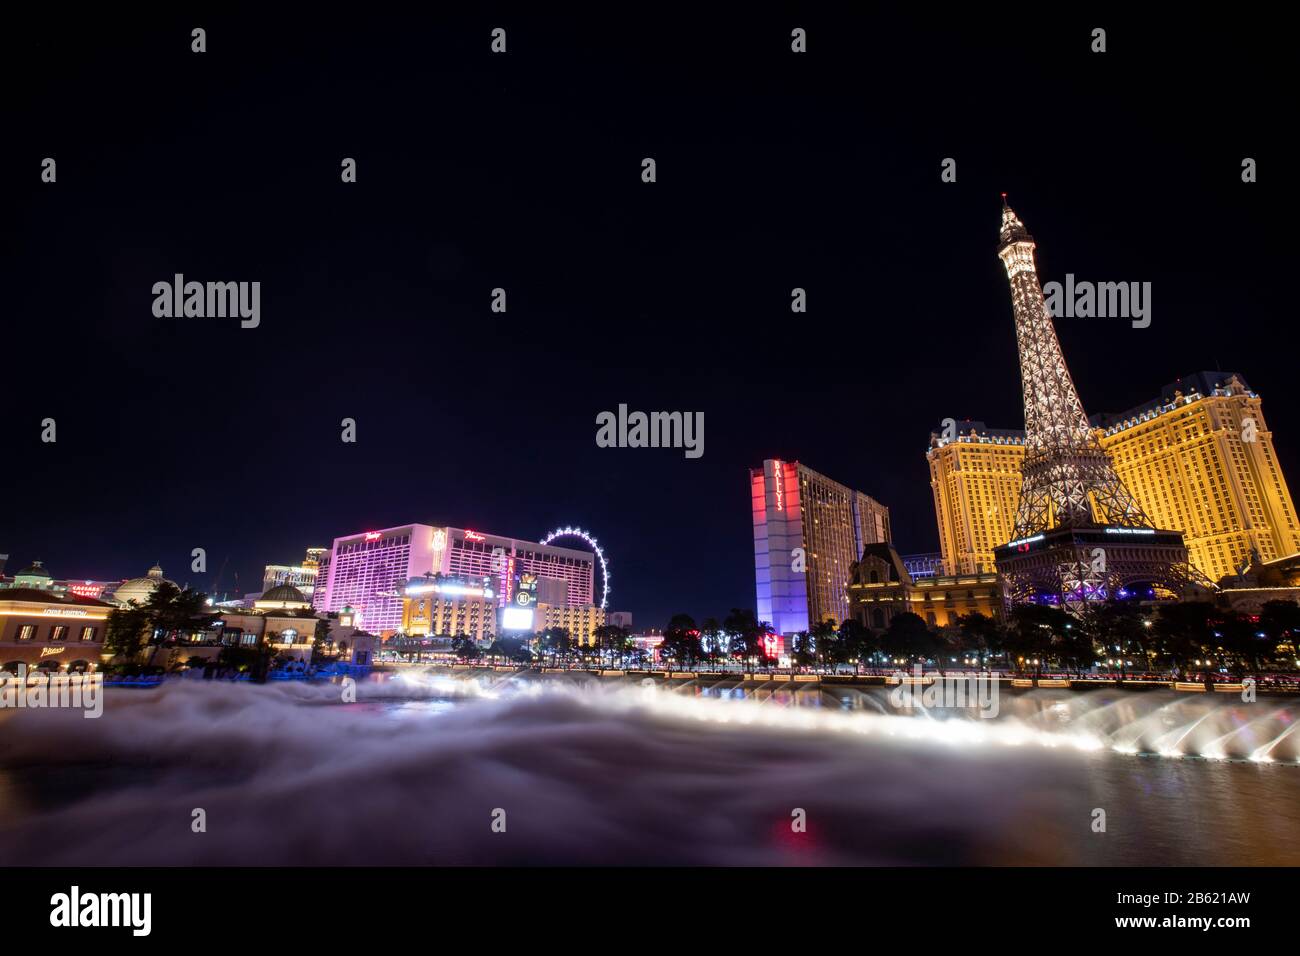 Las Vegas USA Bellagio Fountains overlooking Paris Stock Photo